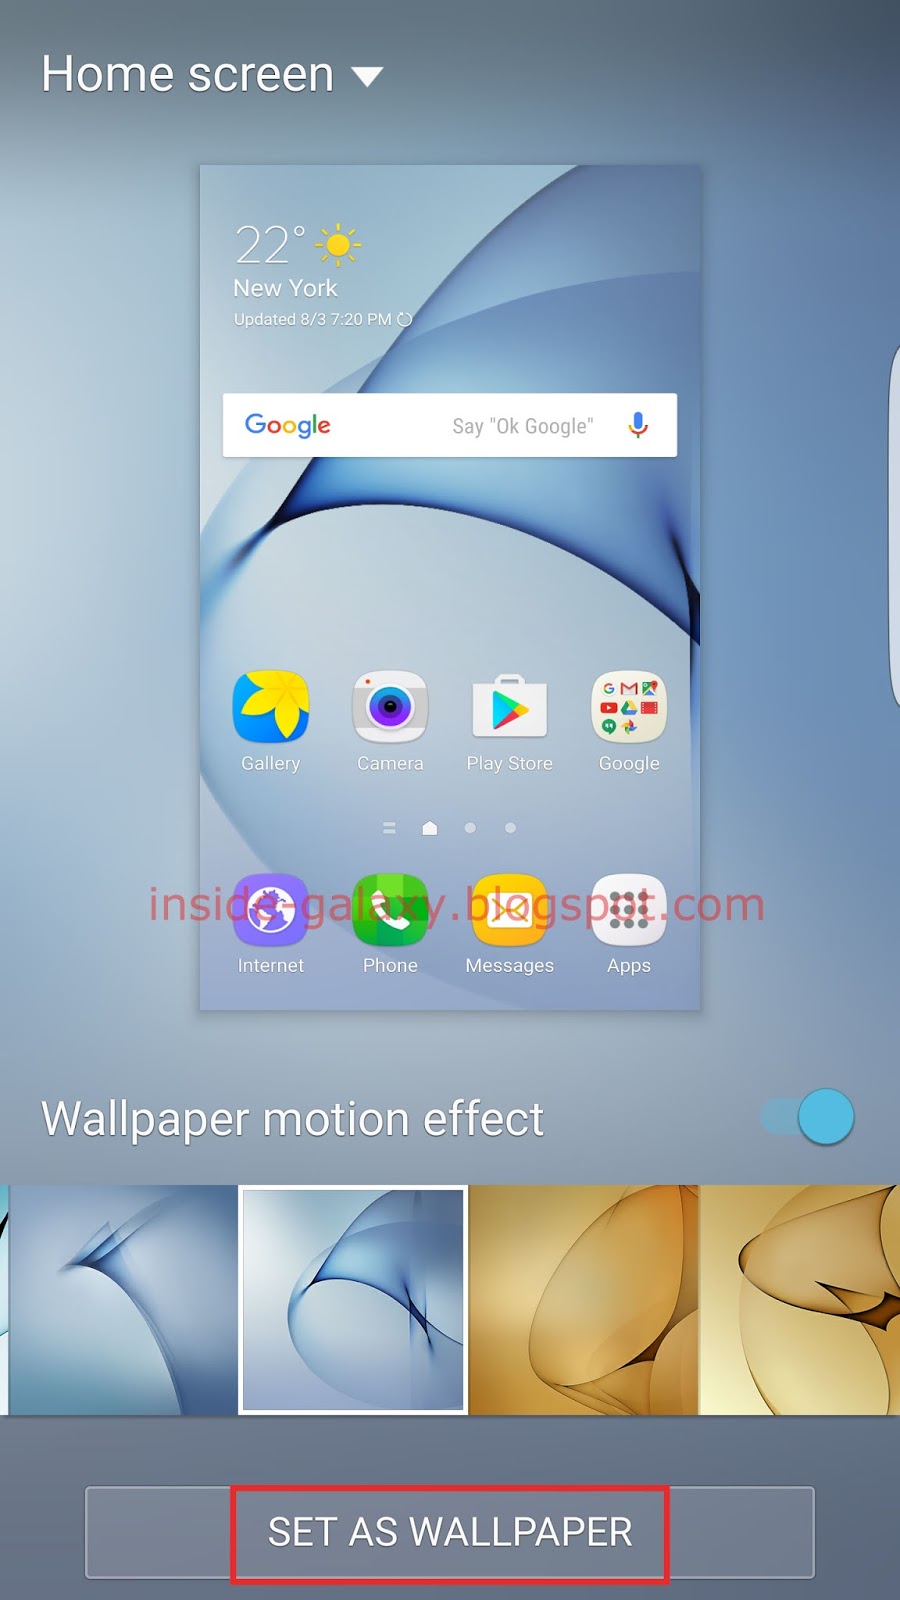 Inside Galaxy Samsung Galaxy S7 Edge How To Change Home Screen